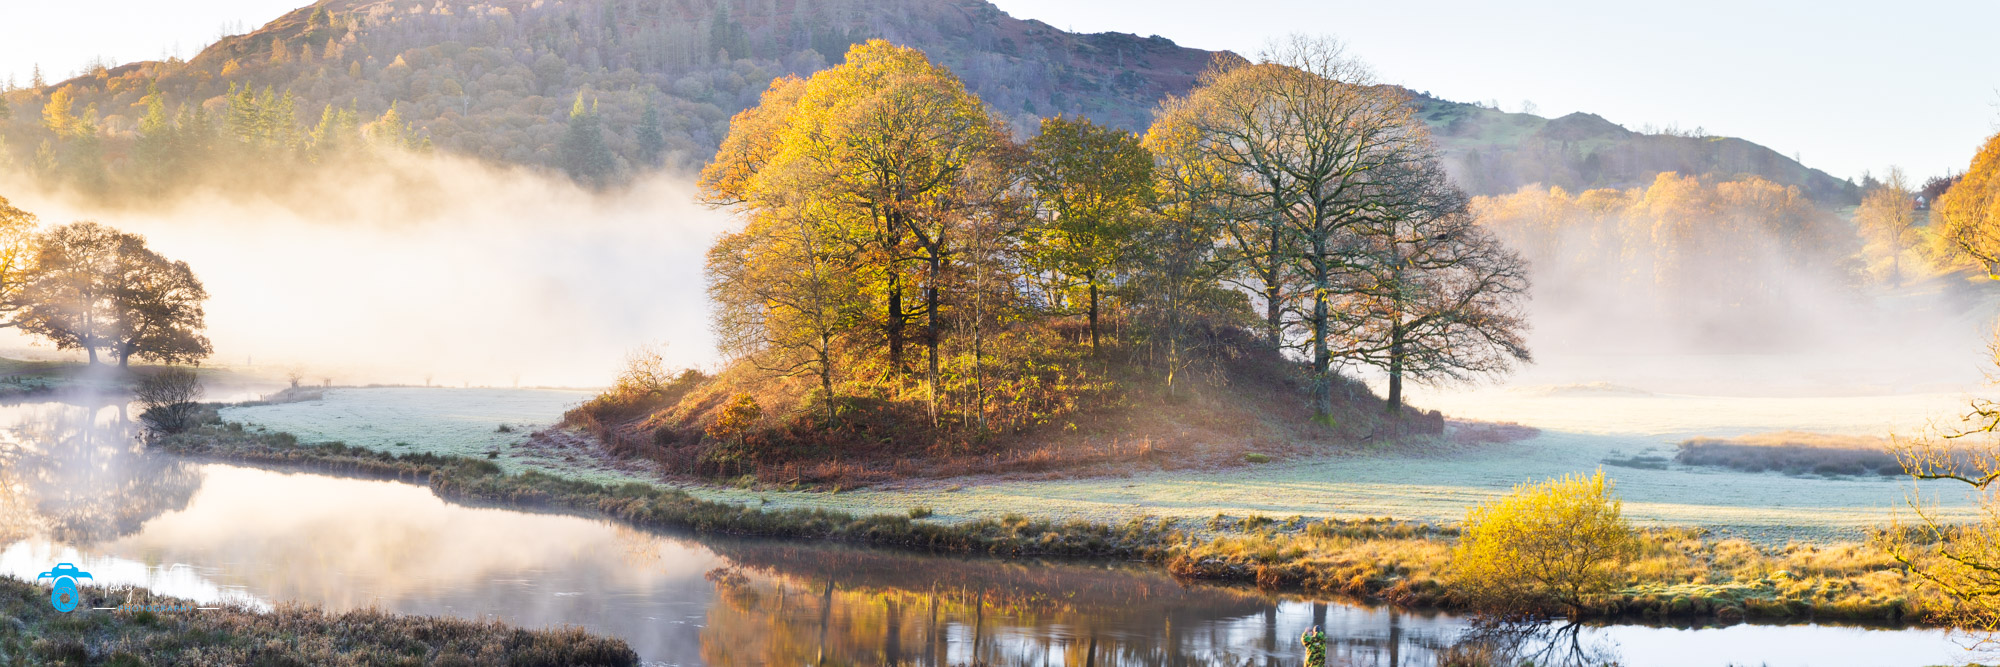 tony-tomlinson-photography-River-Brathay-Elterwater- lake-district-Cumbria-trees-autumn-mist-2000x667